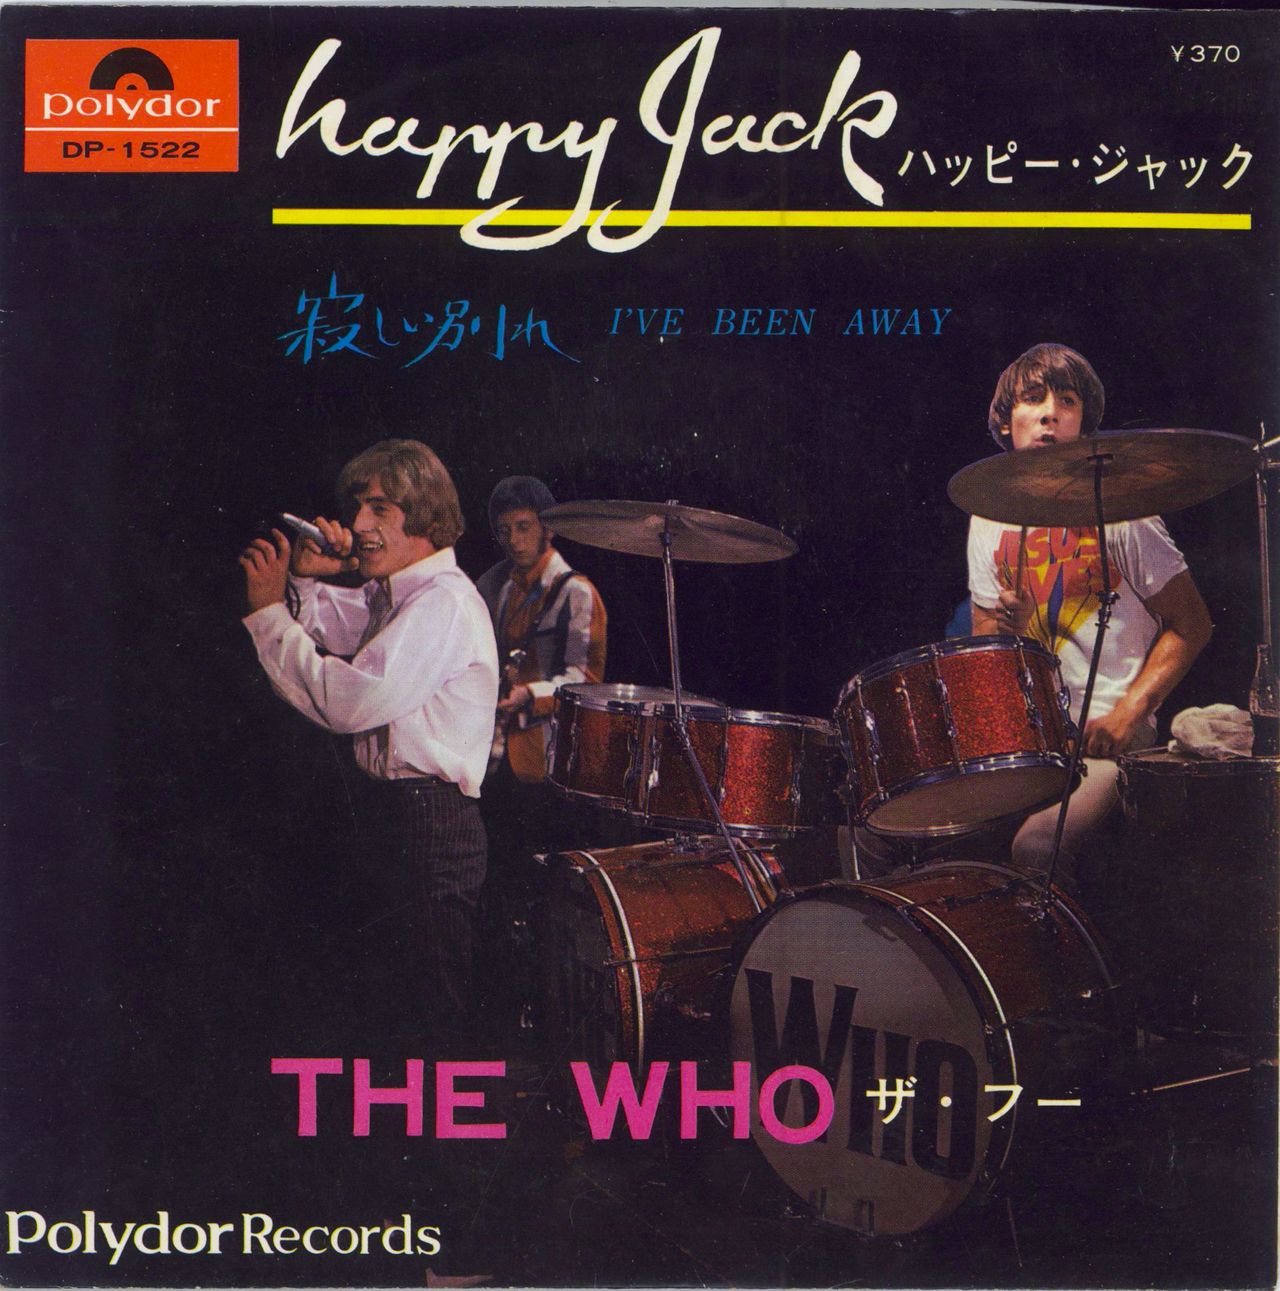 The Who Happy Jack - EX Japanese 7" vinyl single (7 inch record / 45) DP-1522